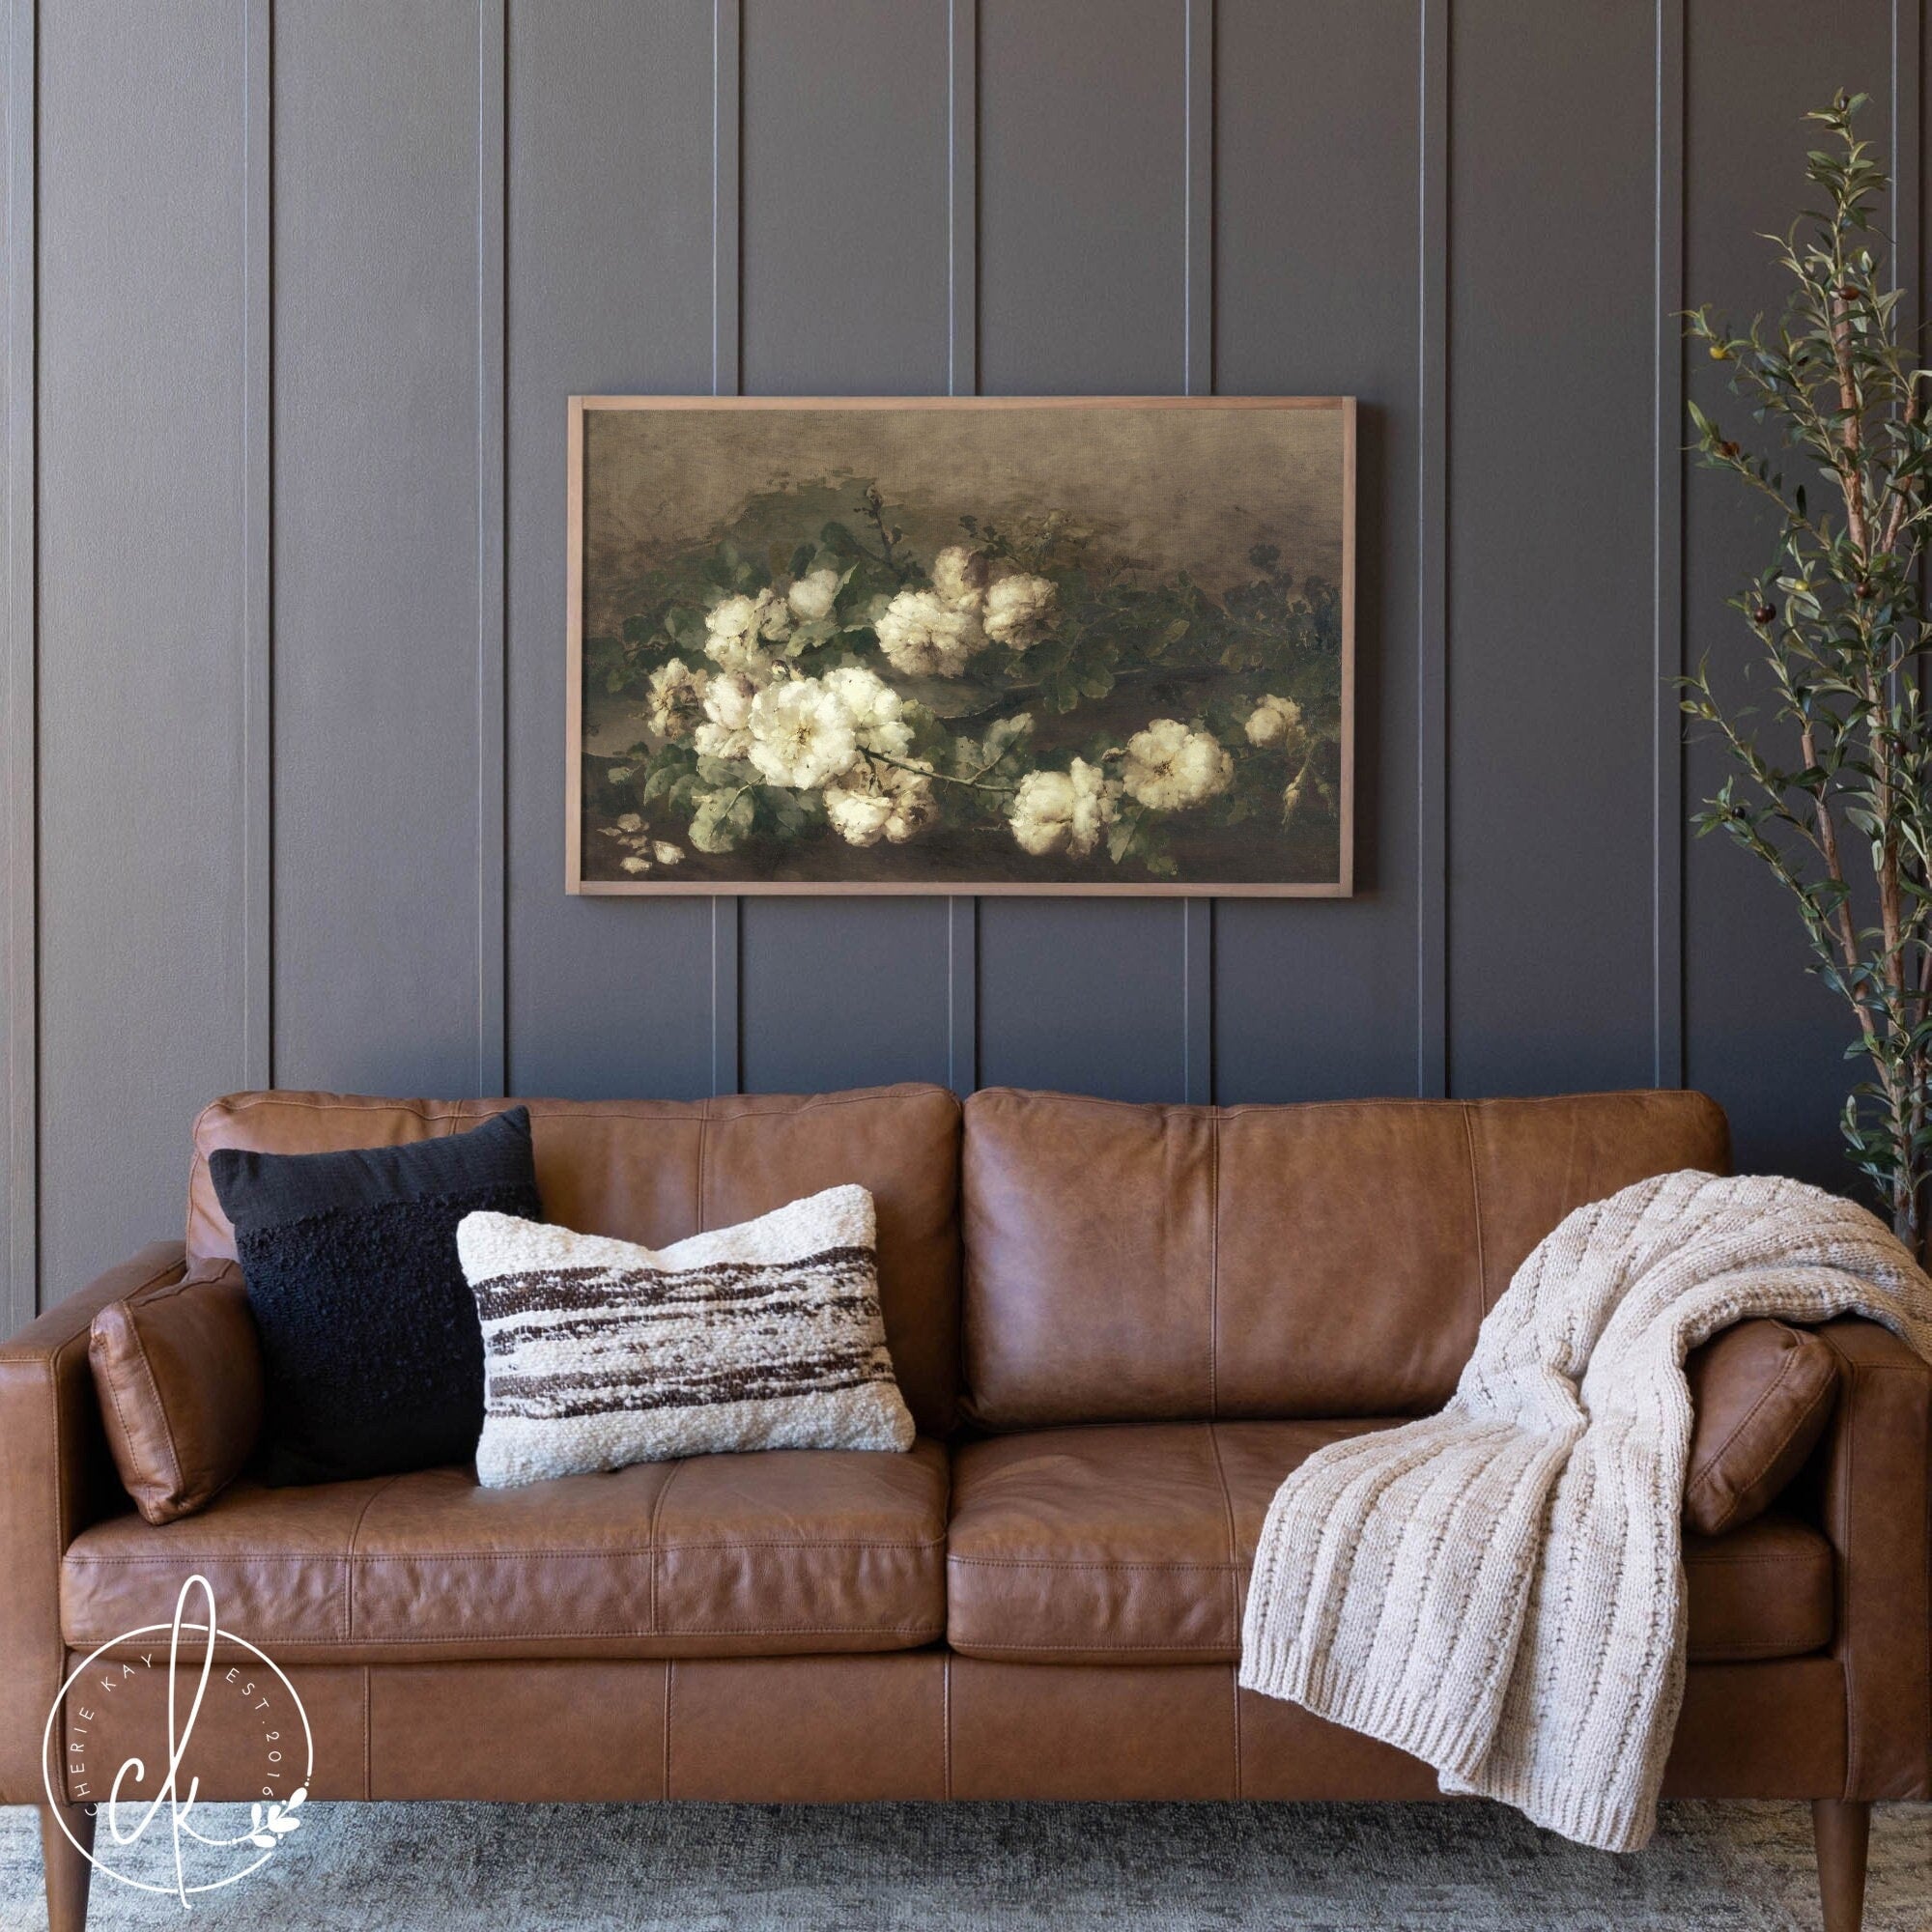 Floral Wall Art | Botanical Art | Framed Wall Art | Living Room Decor | Vintage Wall Art | White Bouquet Painting